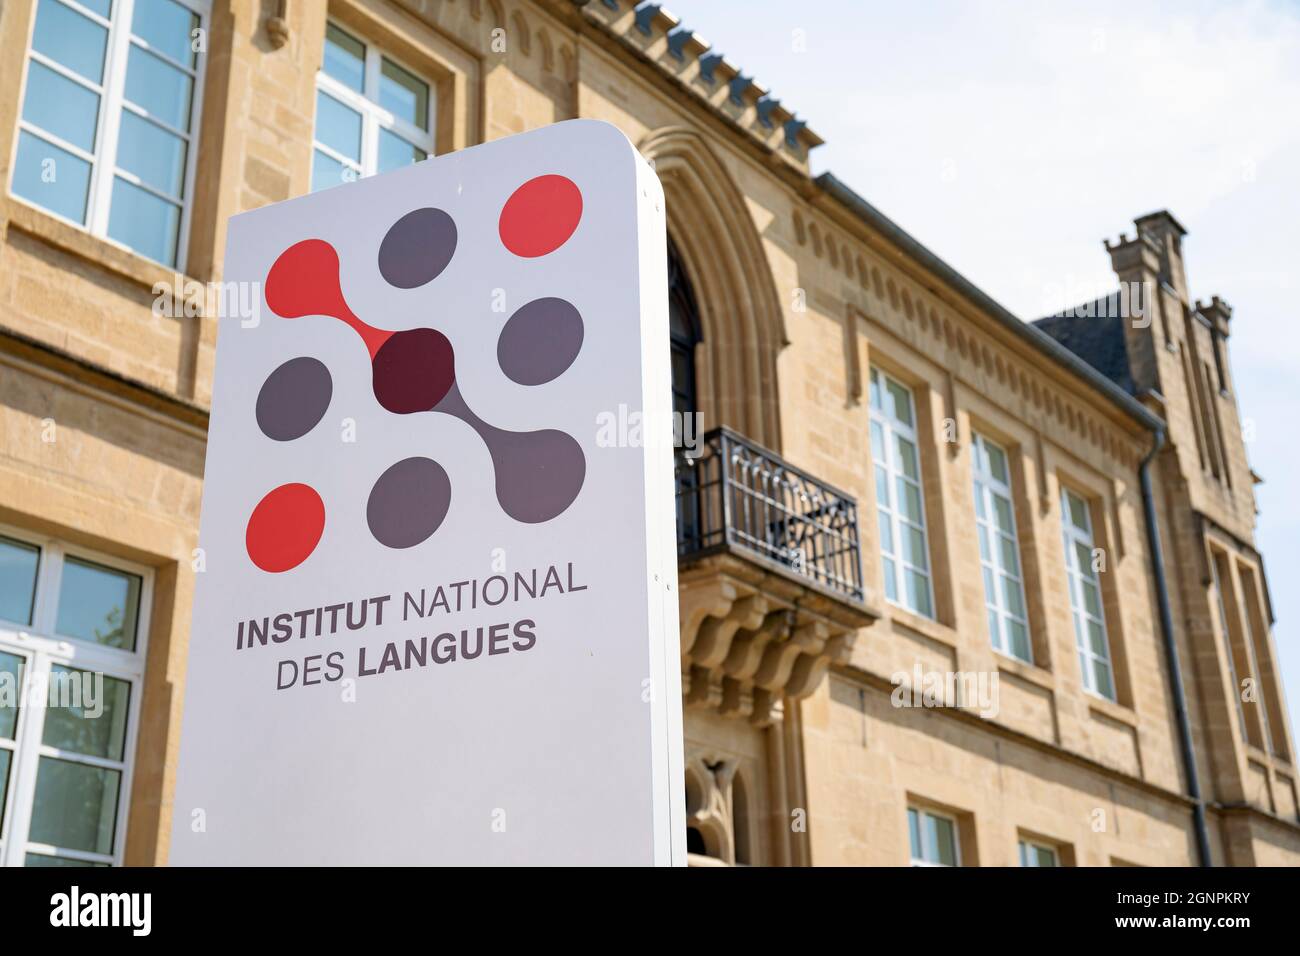 Europa, Lussemburgo, Mersch, Institute National des Langues (Istituto nazionale delle lingue) con cartello d'ingresso Foto Stock